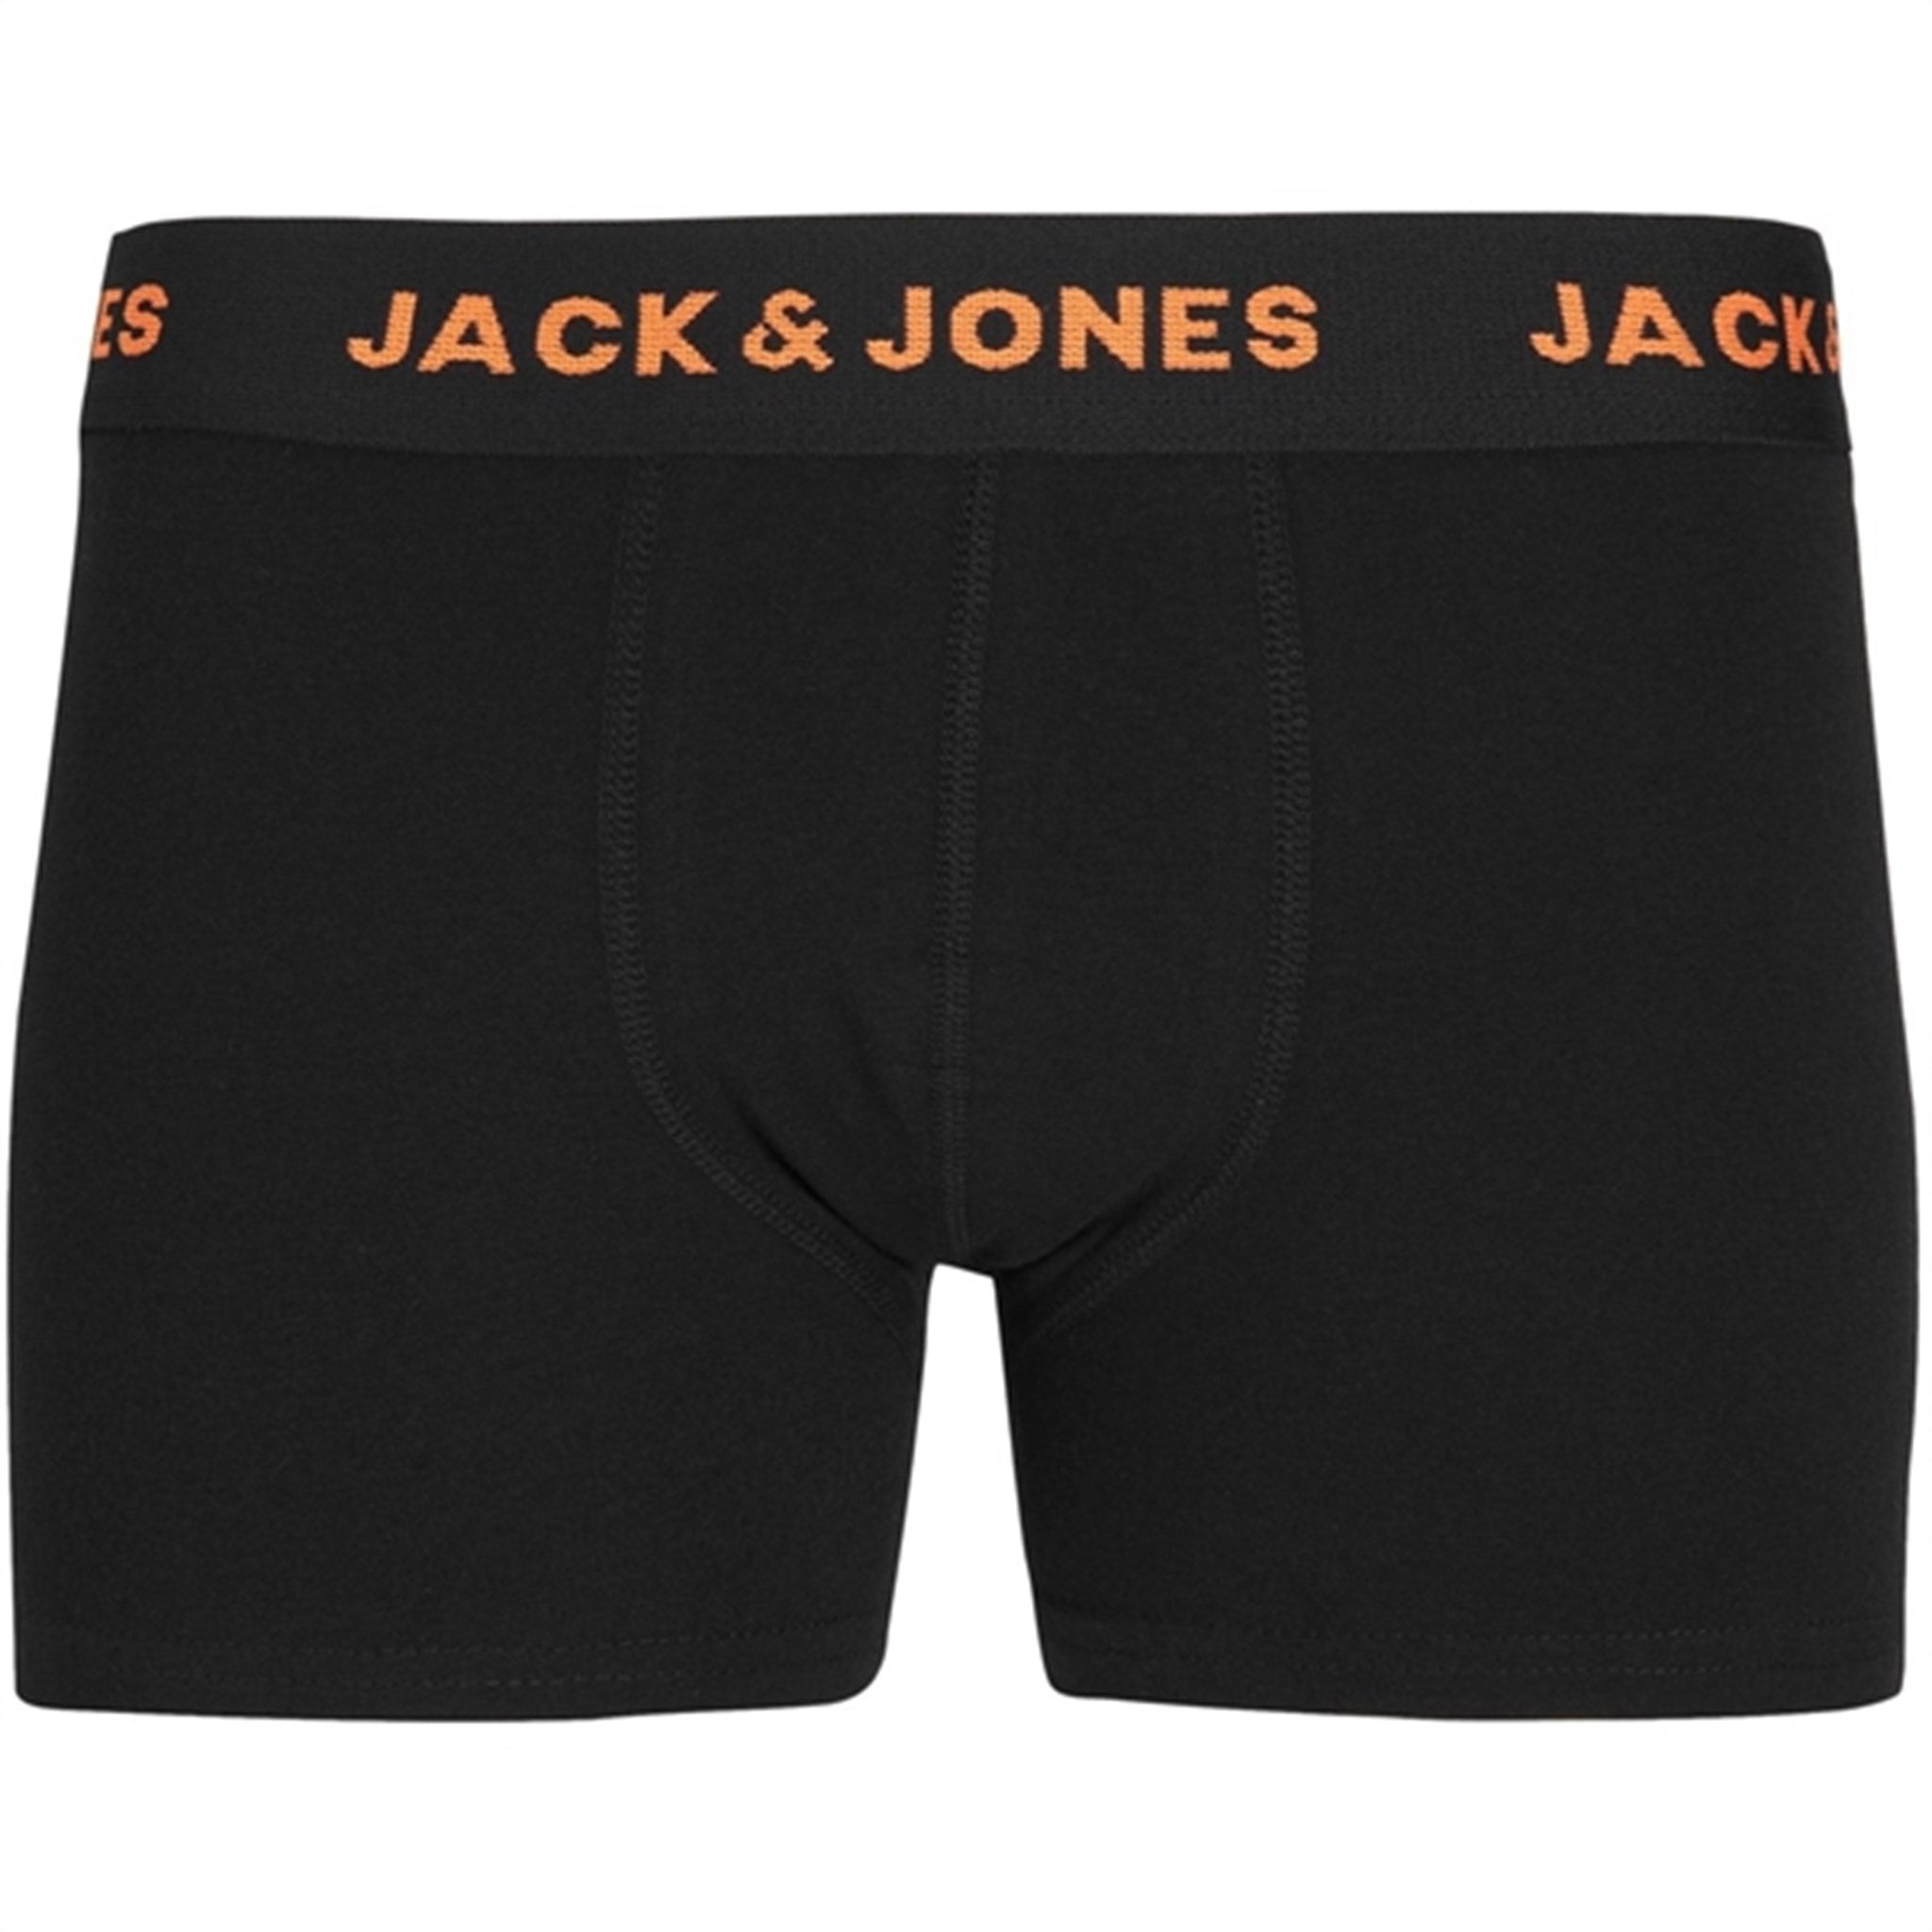 Jack & Jones Junior Black Basic Boxer Shorts 7-pack Noos 5